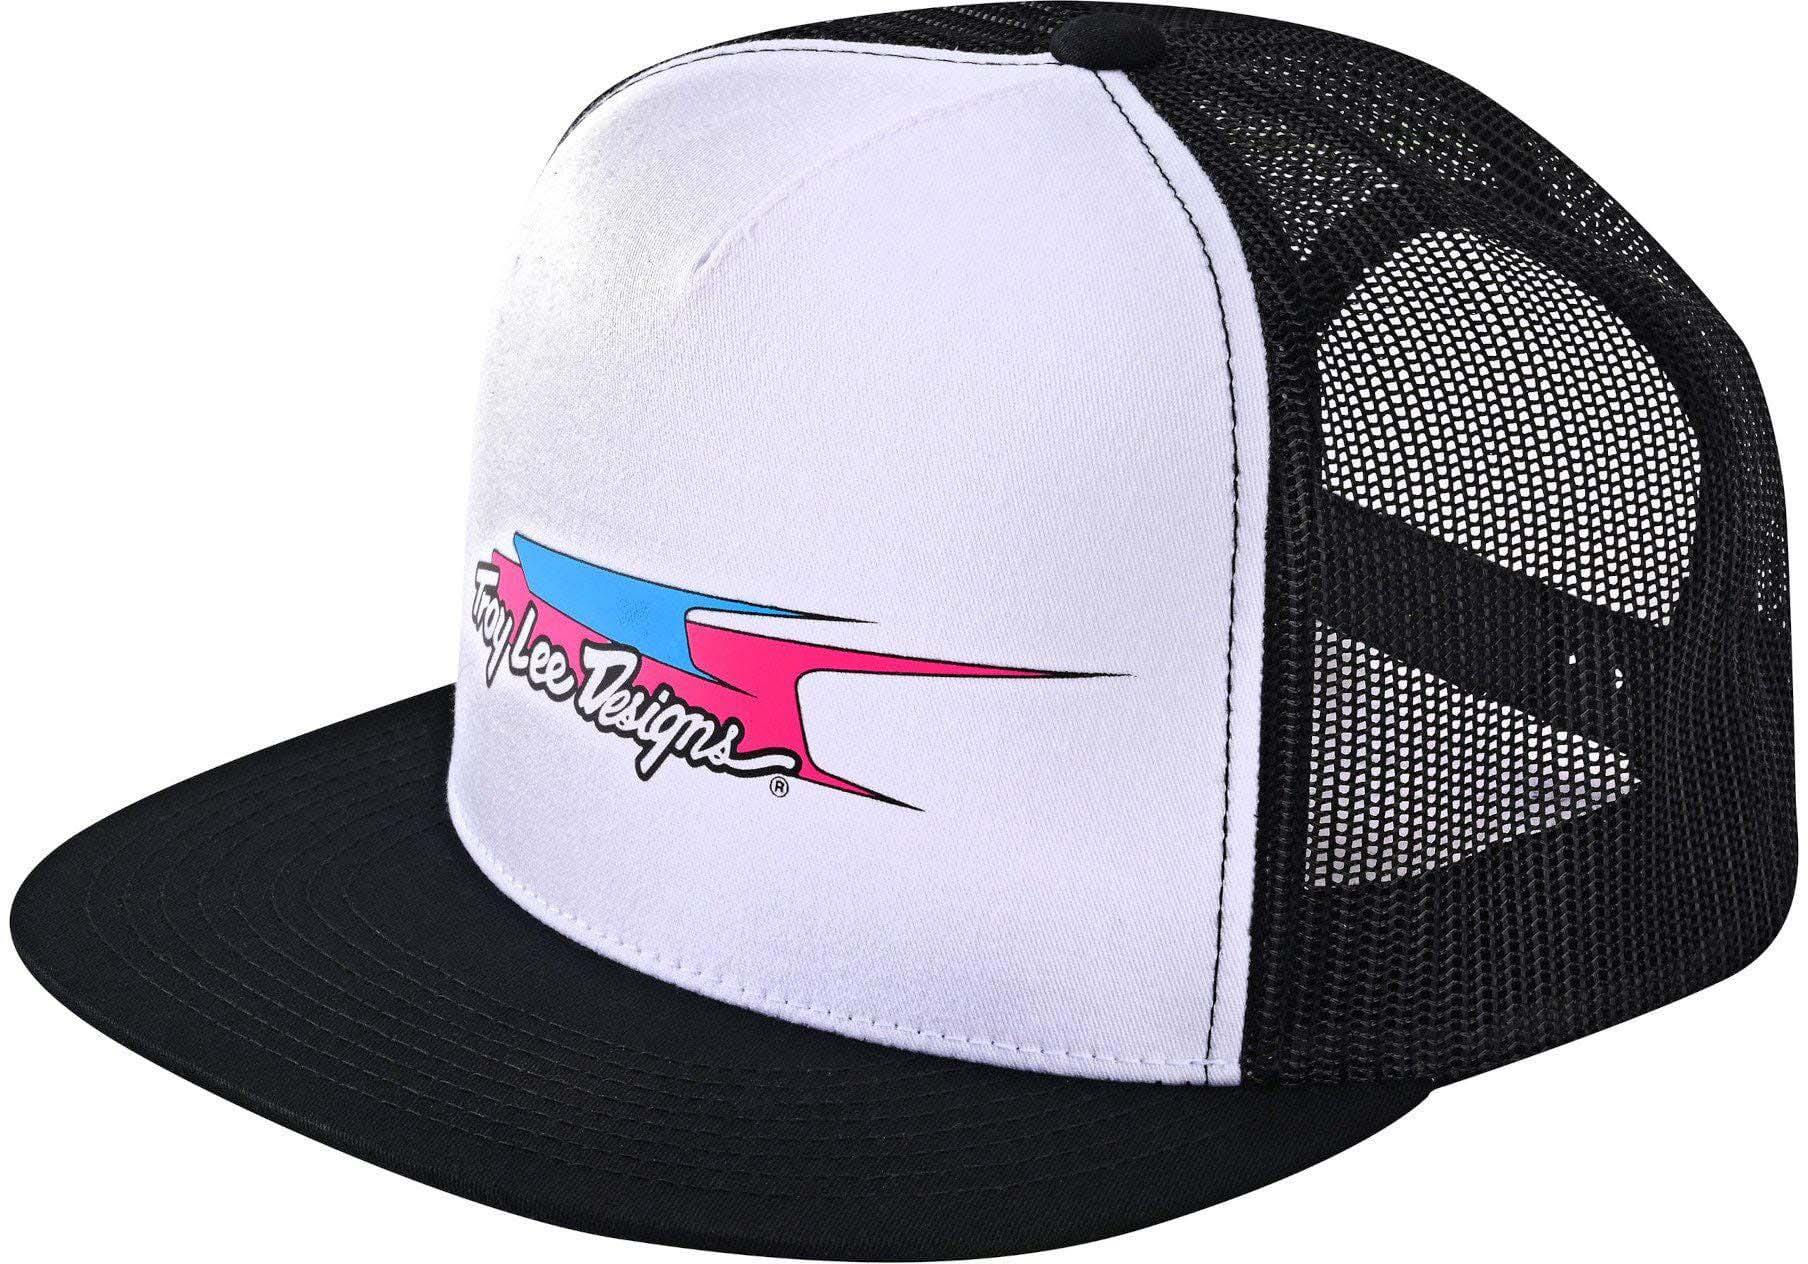 Troy Lee Designs Aero Snapback Trucker Hat - Black/white